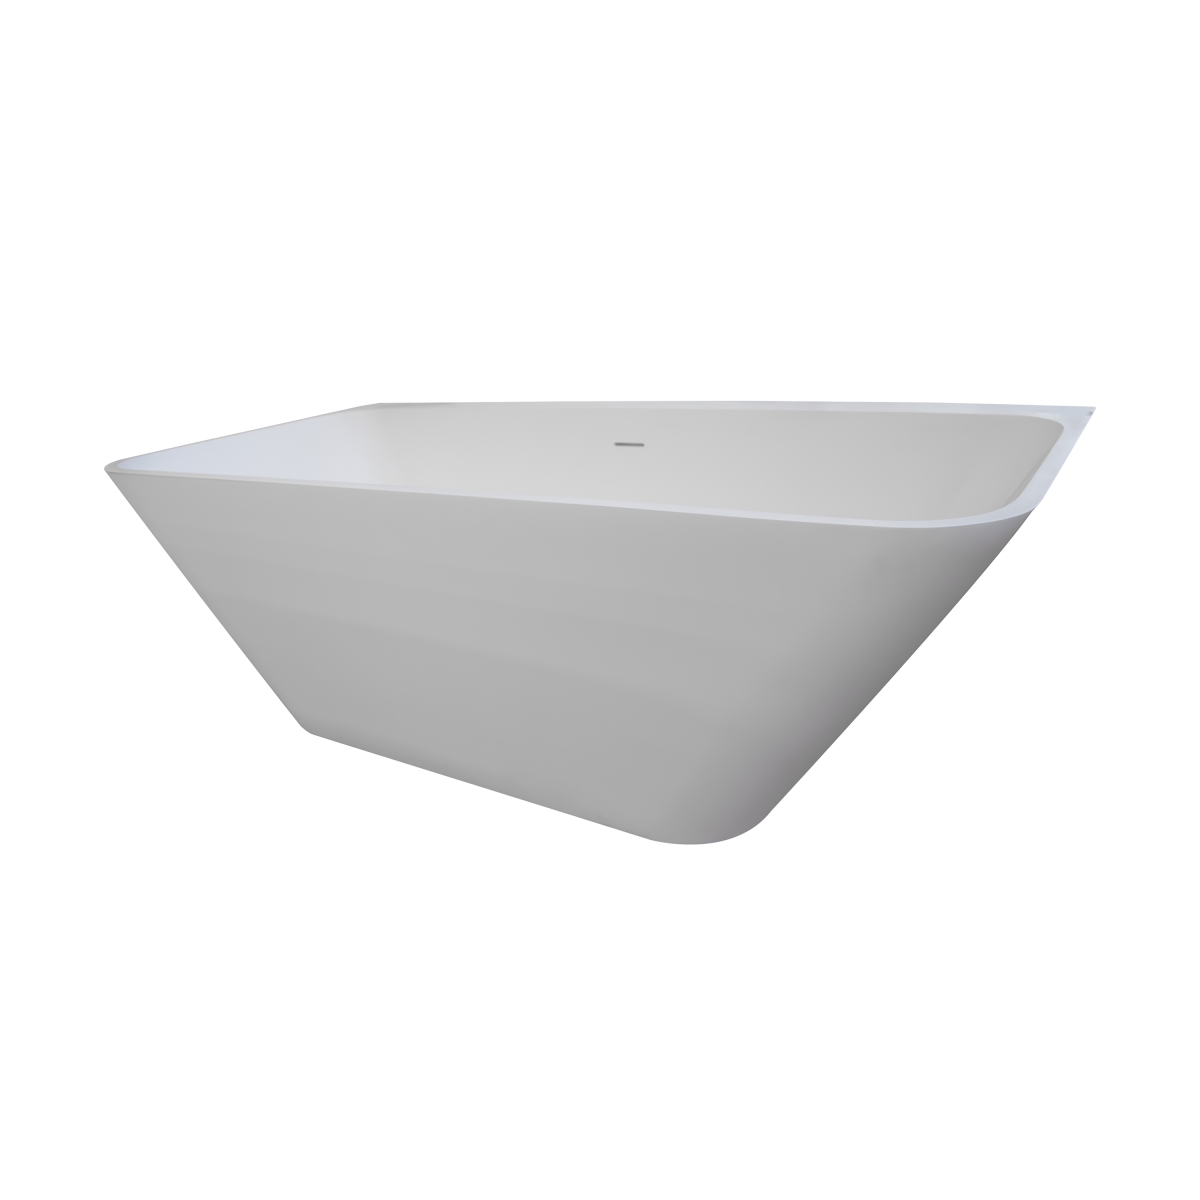 Lushwht Contemporary Rectangular Freestanding Matte Cast Resin Insulated Bath Tub, Matte White - 71 X 33 X 21.5 In.